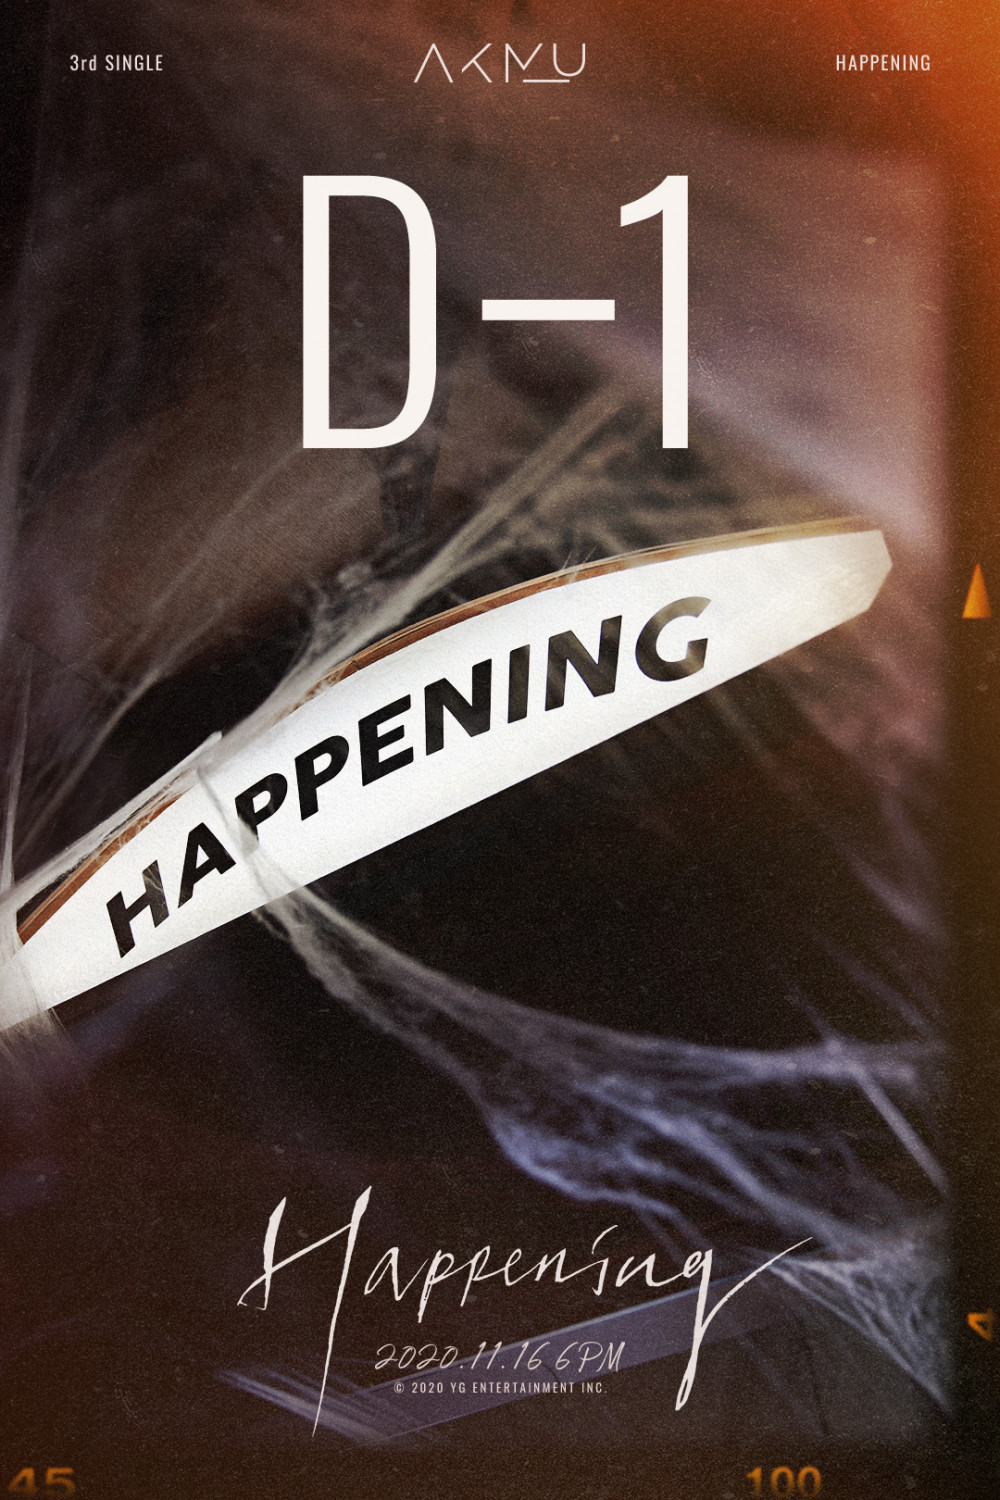 [Камбэк] AKMU 3rd single album "Happening"